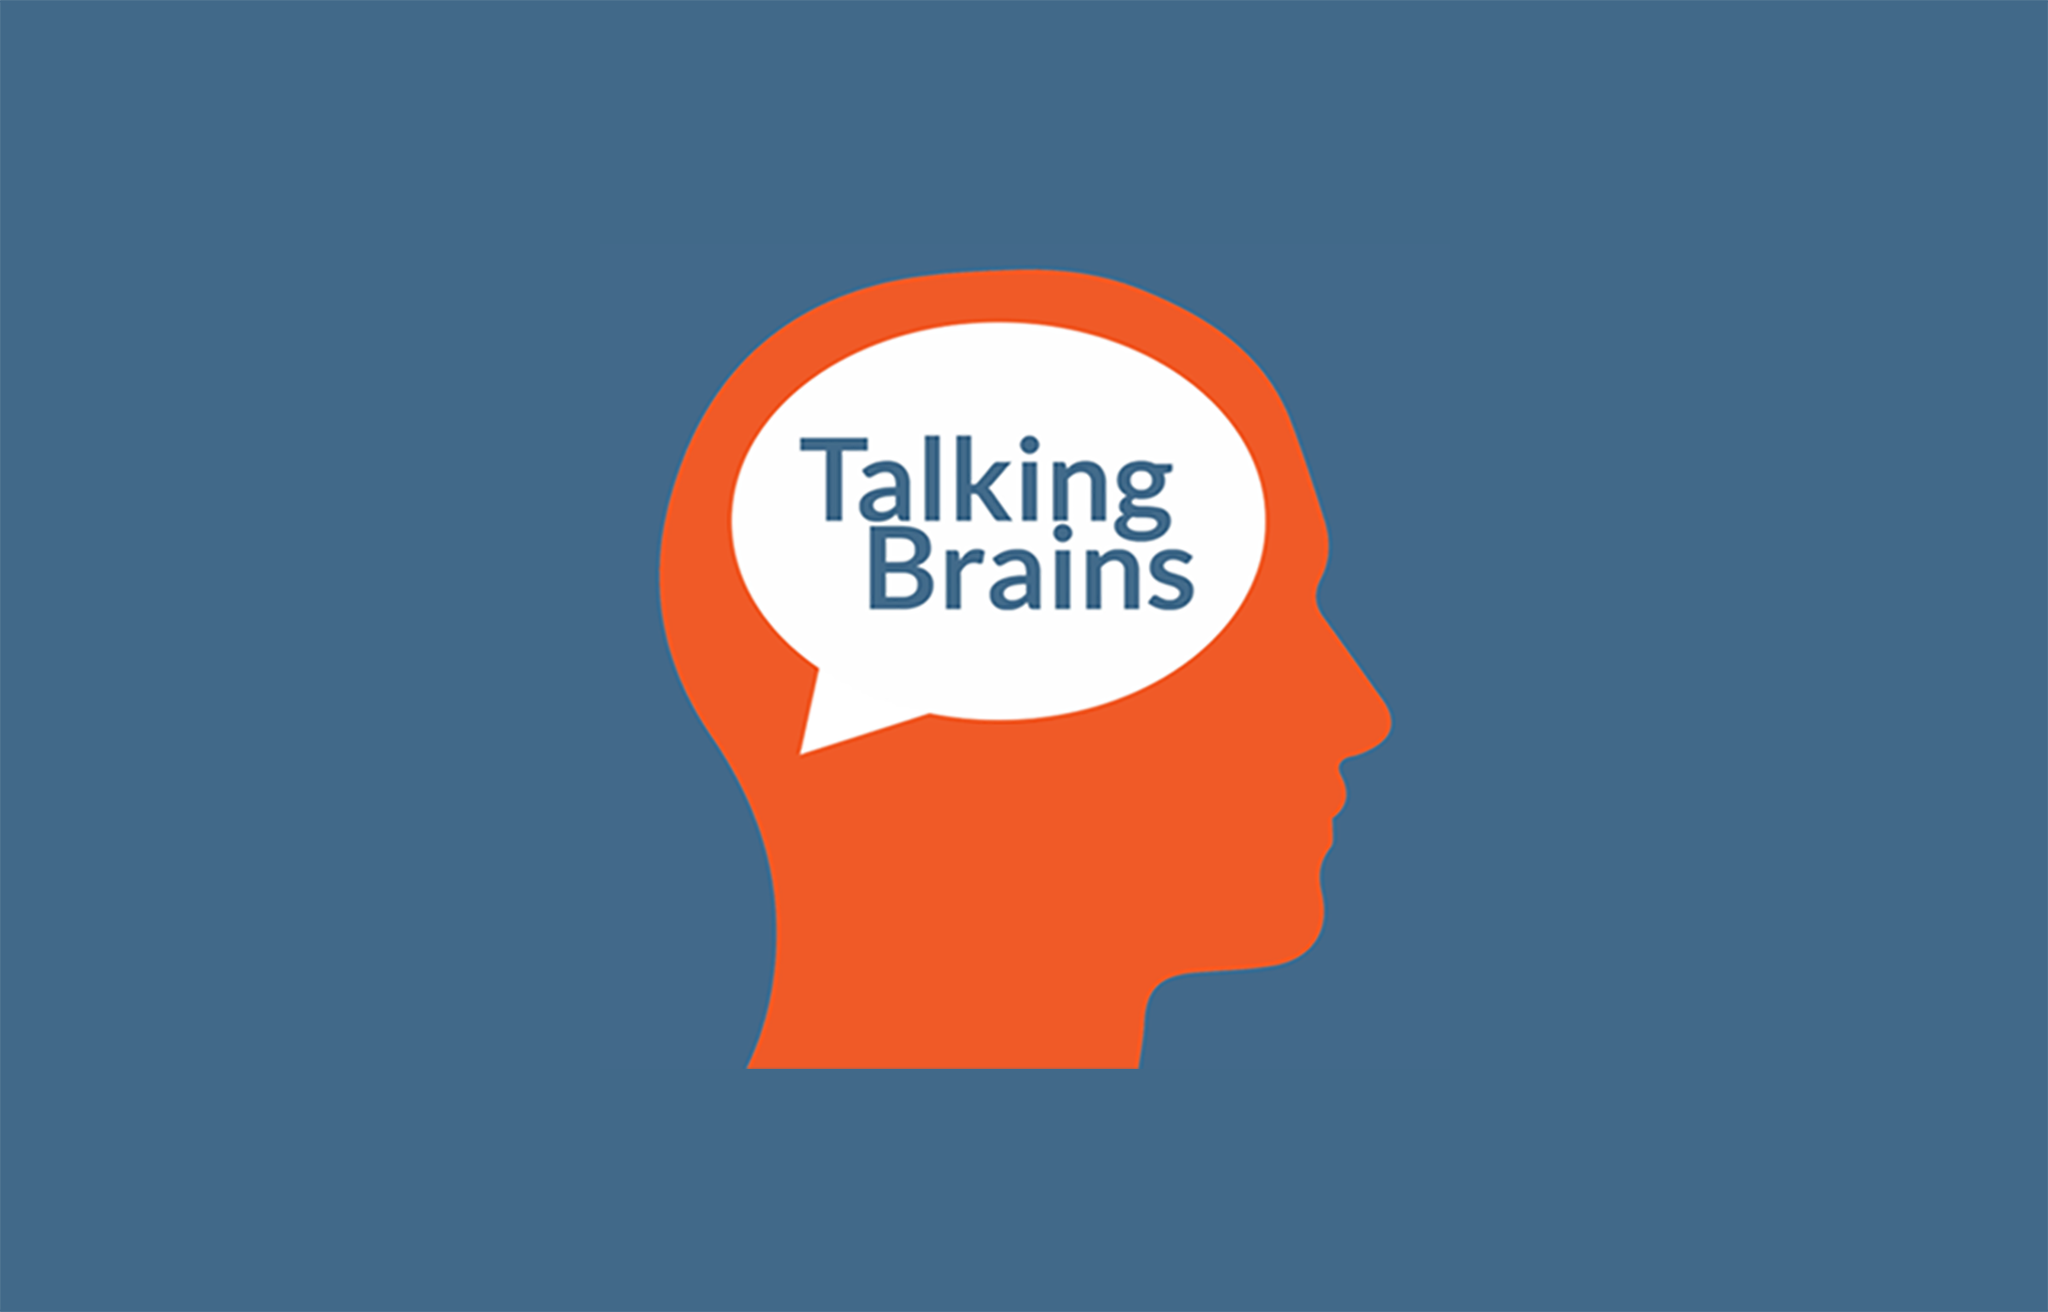 Brains talks. Availability bias. Dunning Kruger Effect. Talk Brain. Gaslighter.